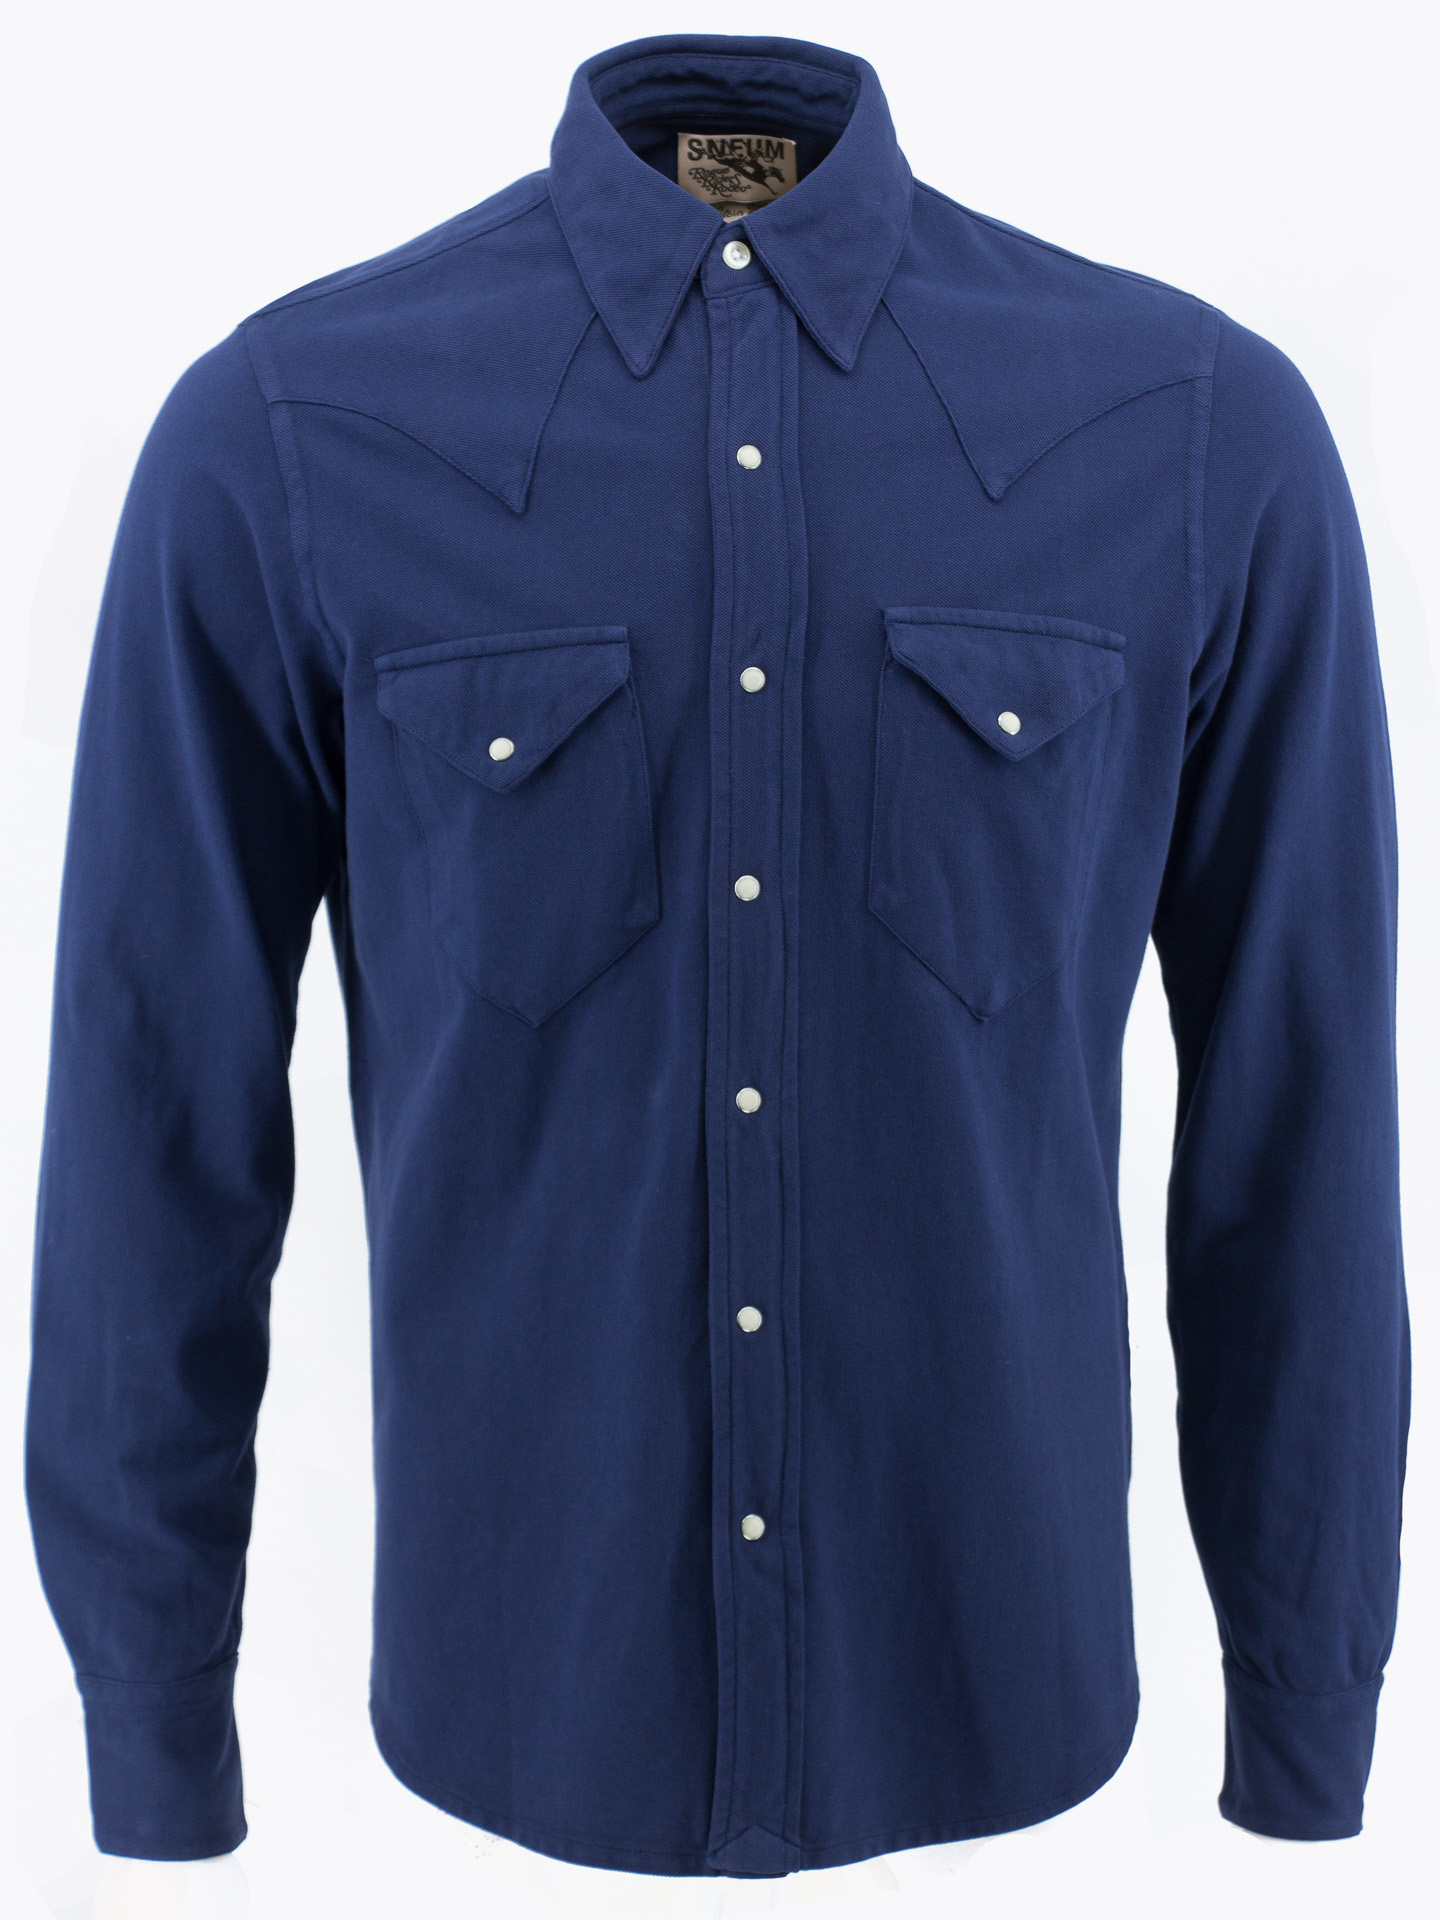 Single point western shirt in 100% oranic cotton pique